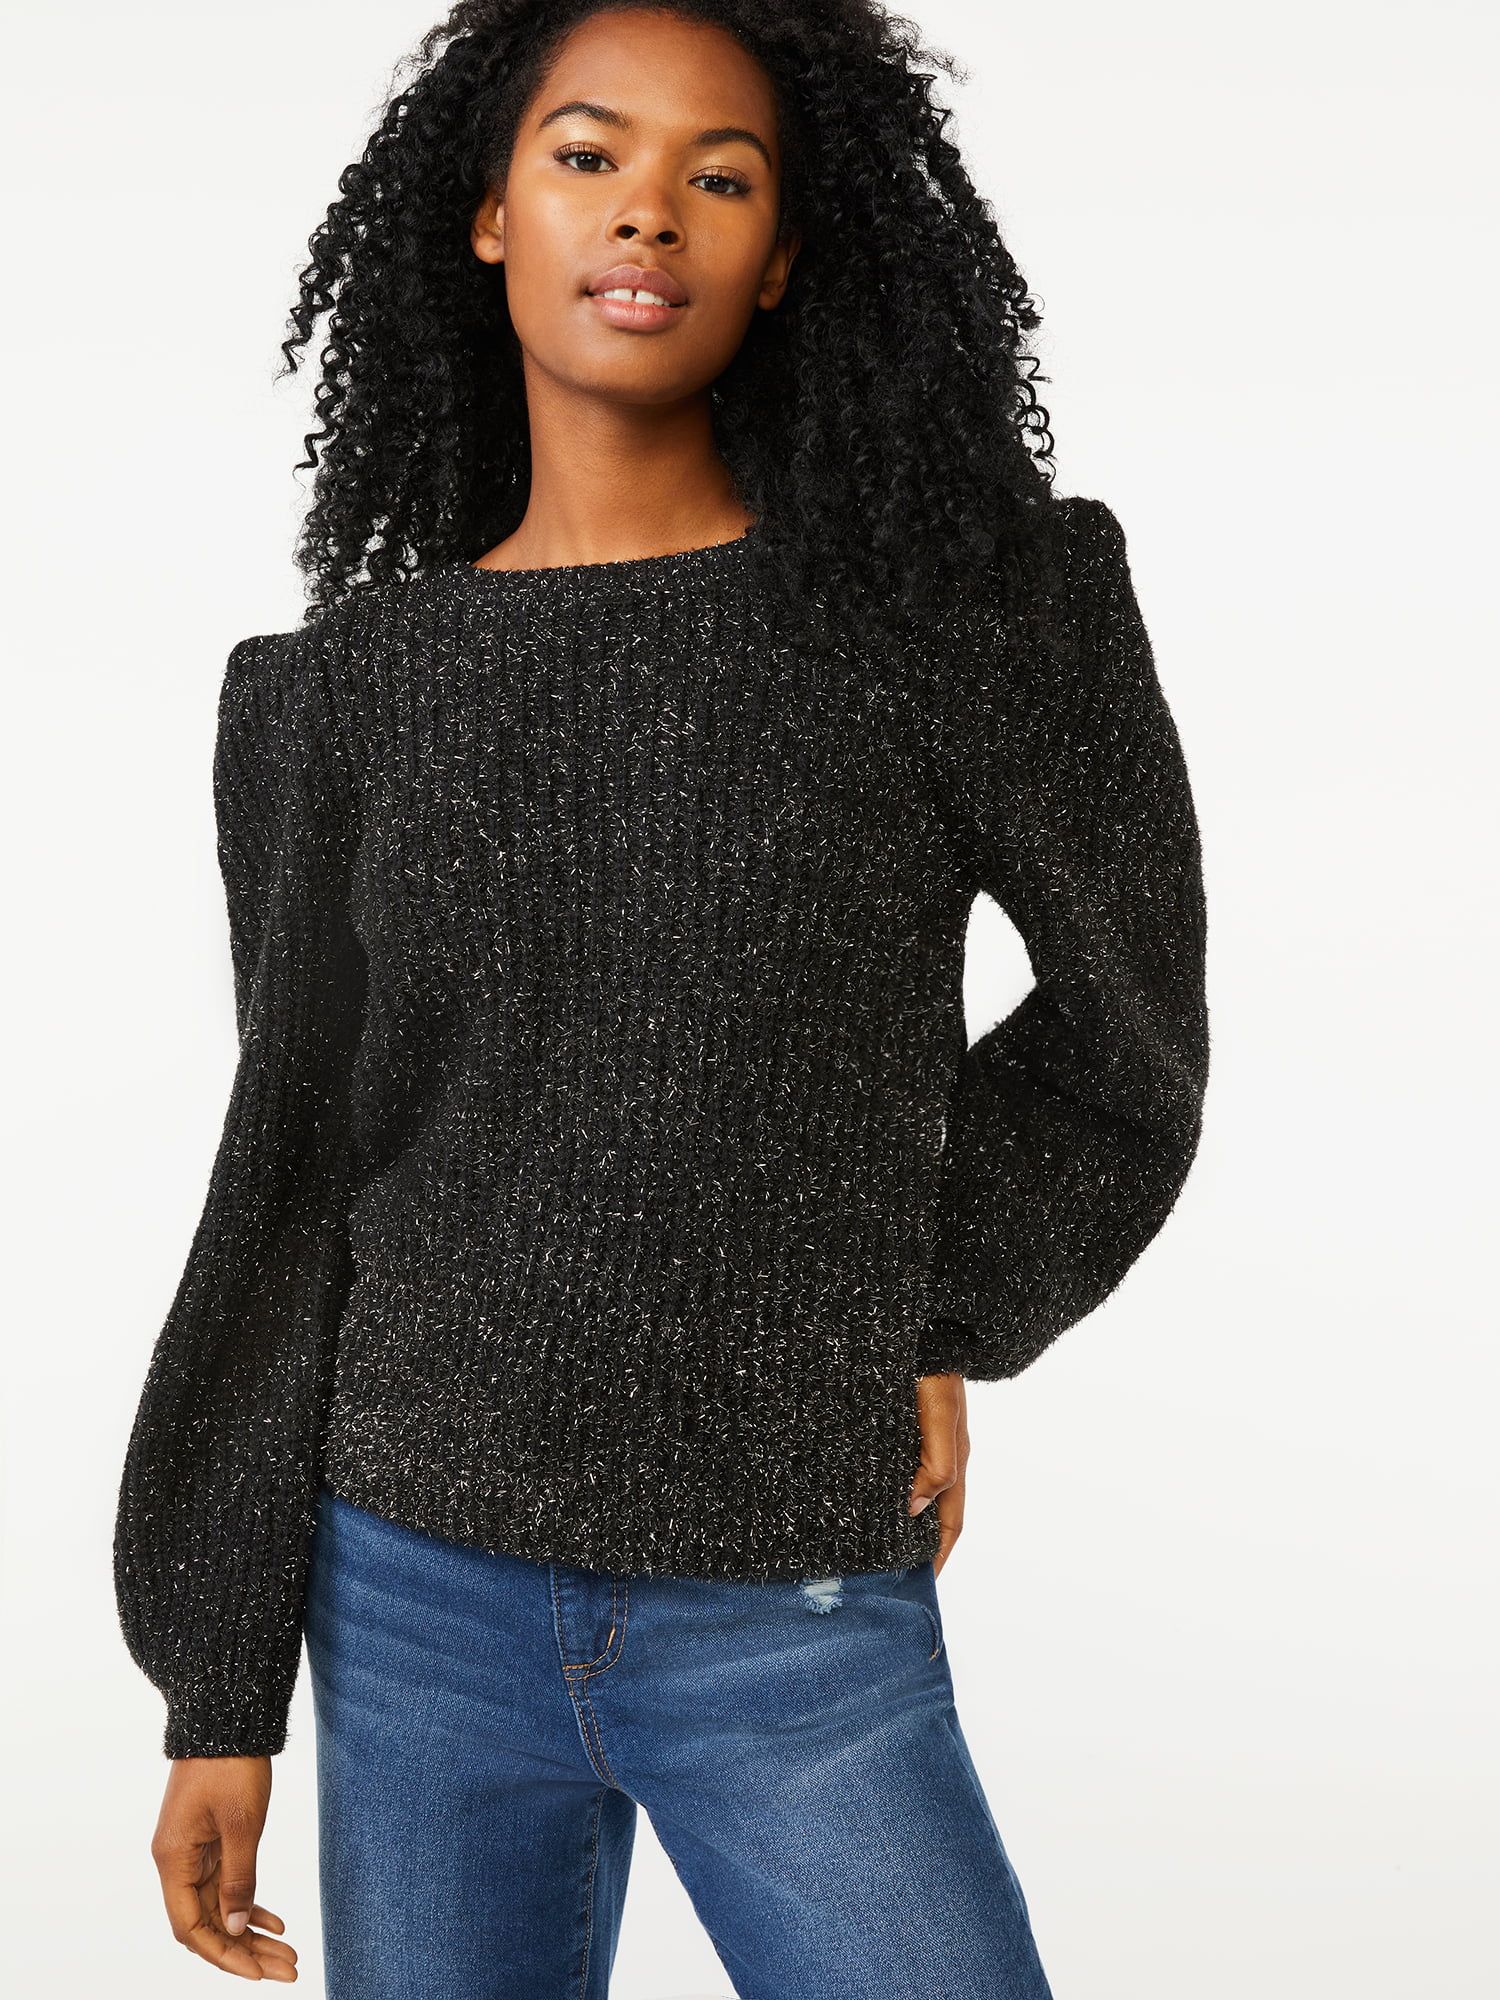 Scoop Women's Soft Tinsel Sweater with Shoulder Detail | Walmart (US)